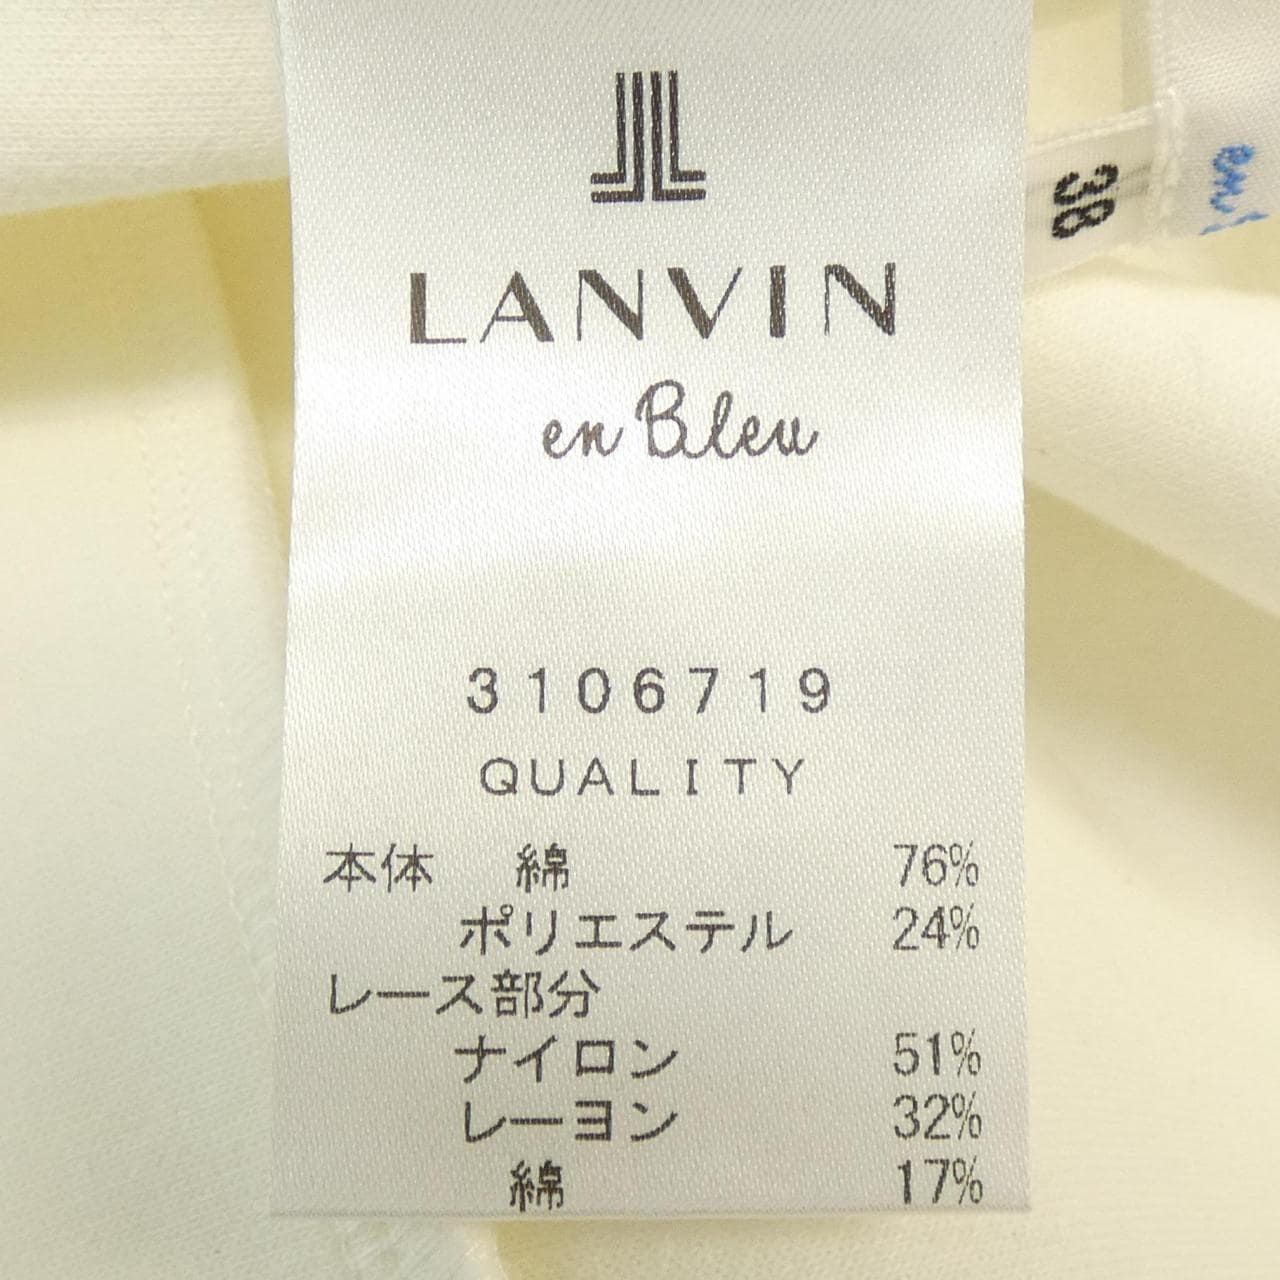 LANVIN On 蓝色 LANVIN en Bleu 卫衣